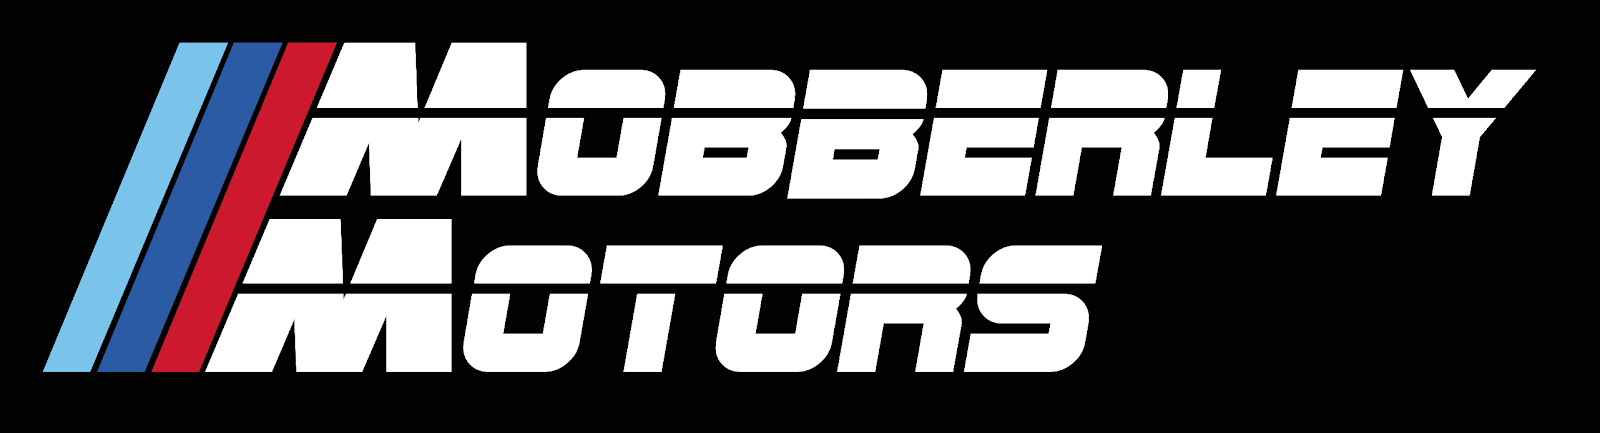 Mobberley Motors Logo